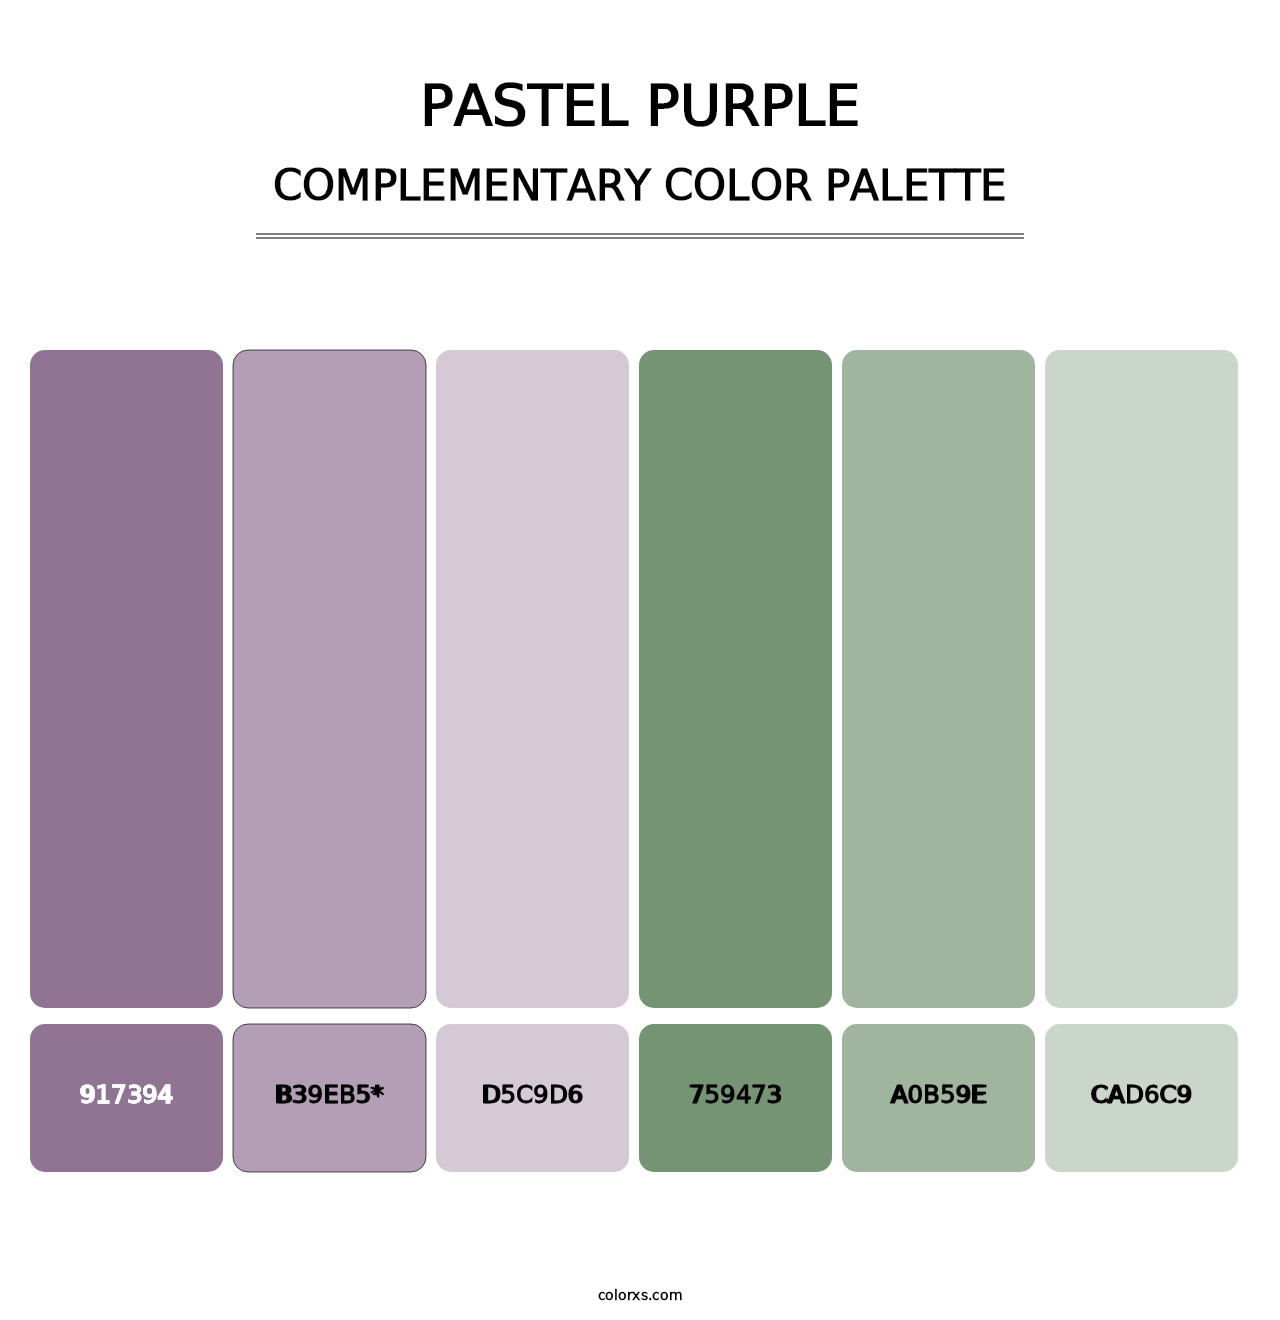 Pastel Purple - Complementary Color Palette